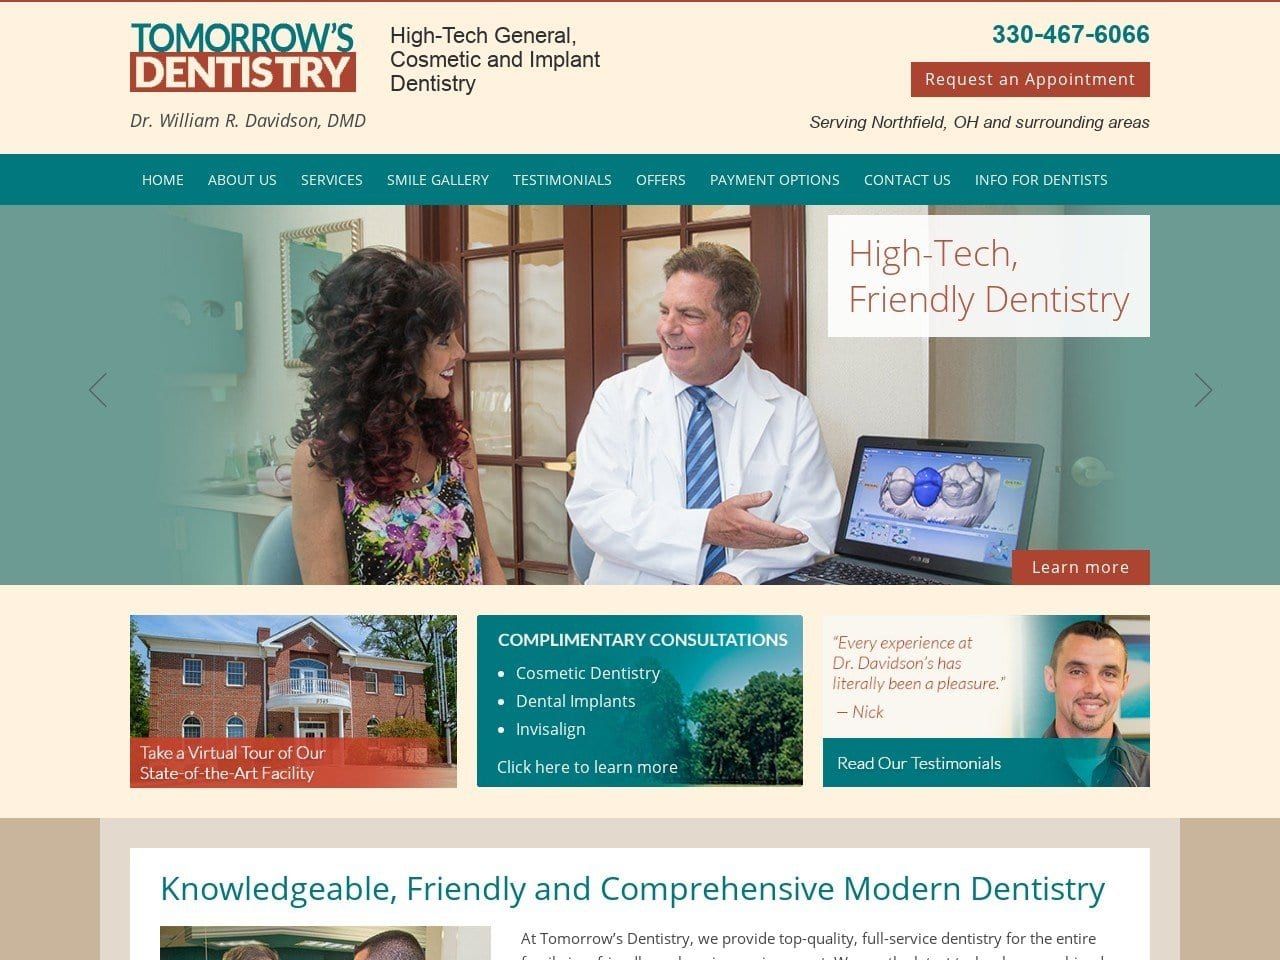 Dr. William R. Davidson DDS Website Screenshot from tomorrowsdentistry.com